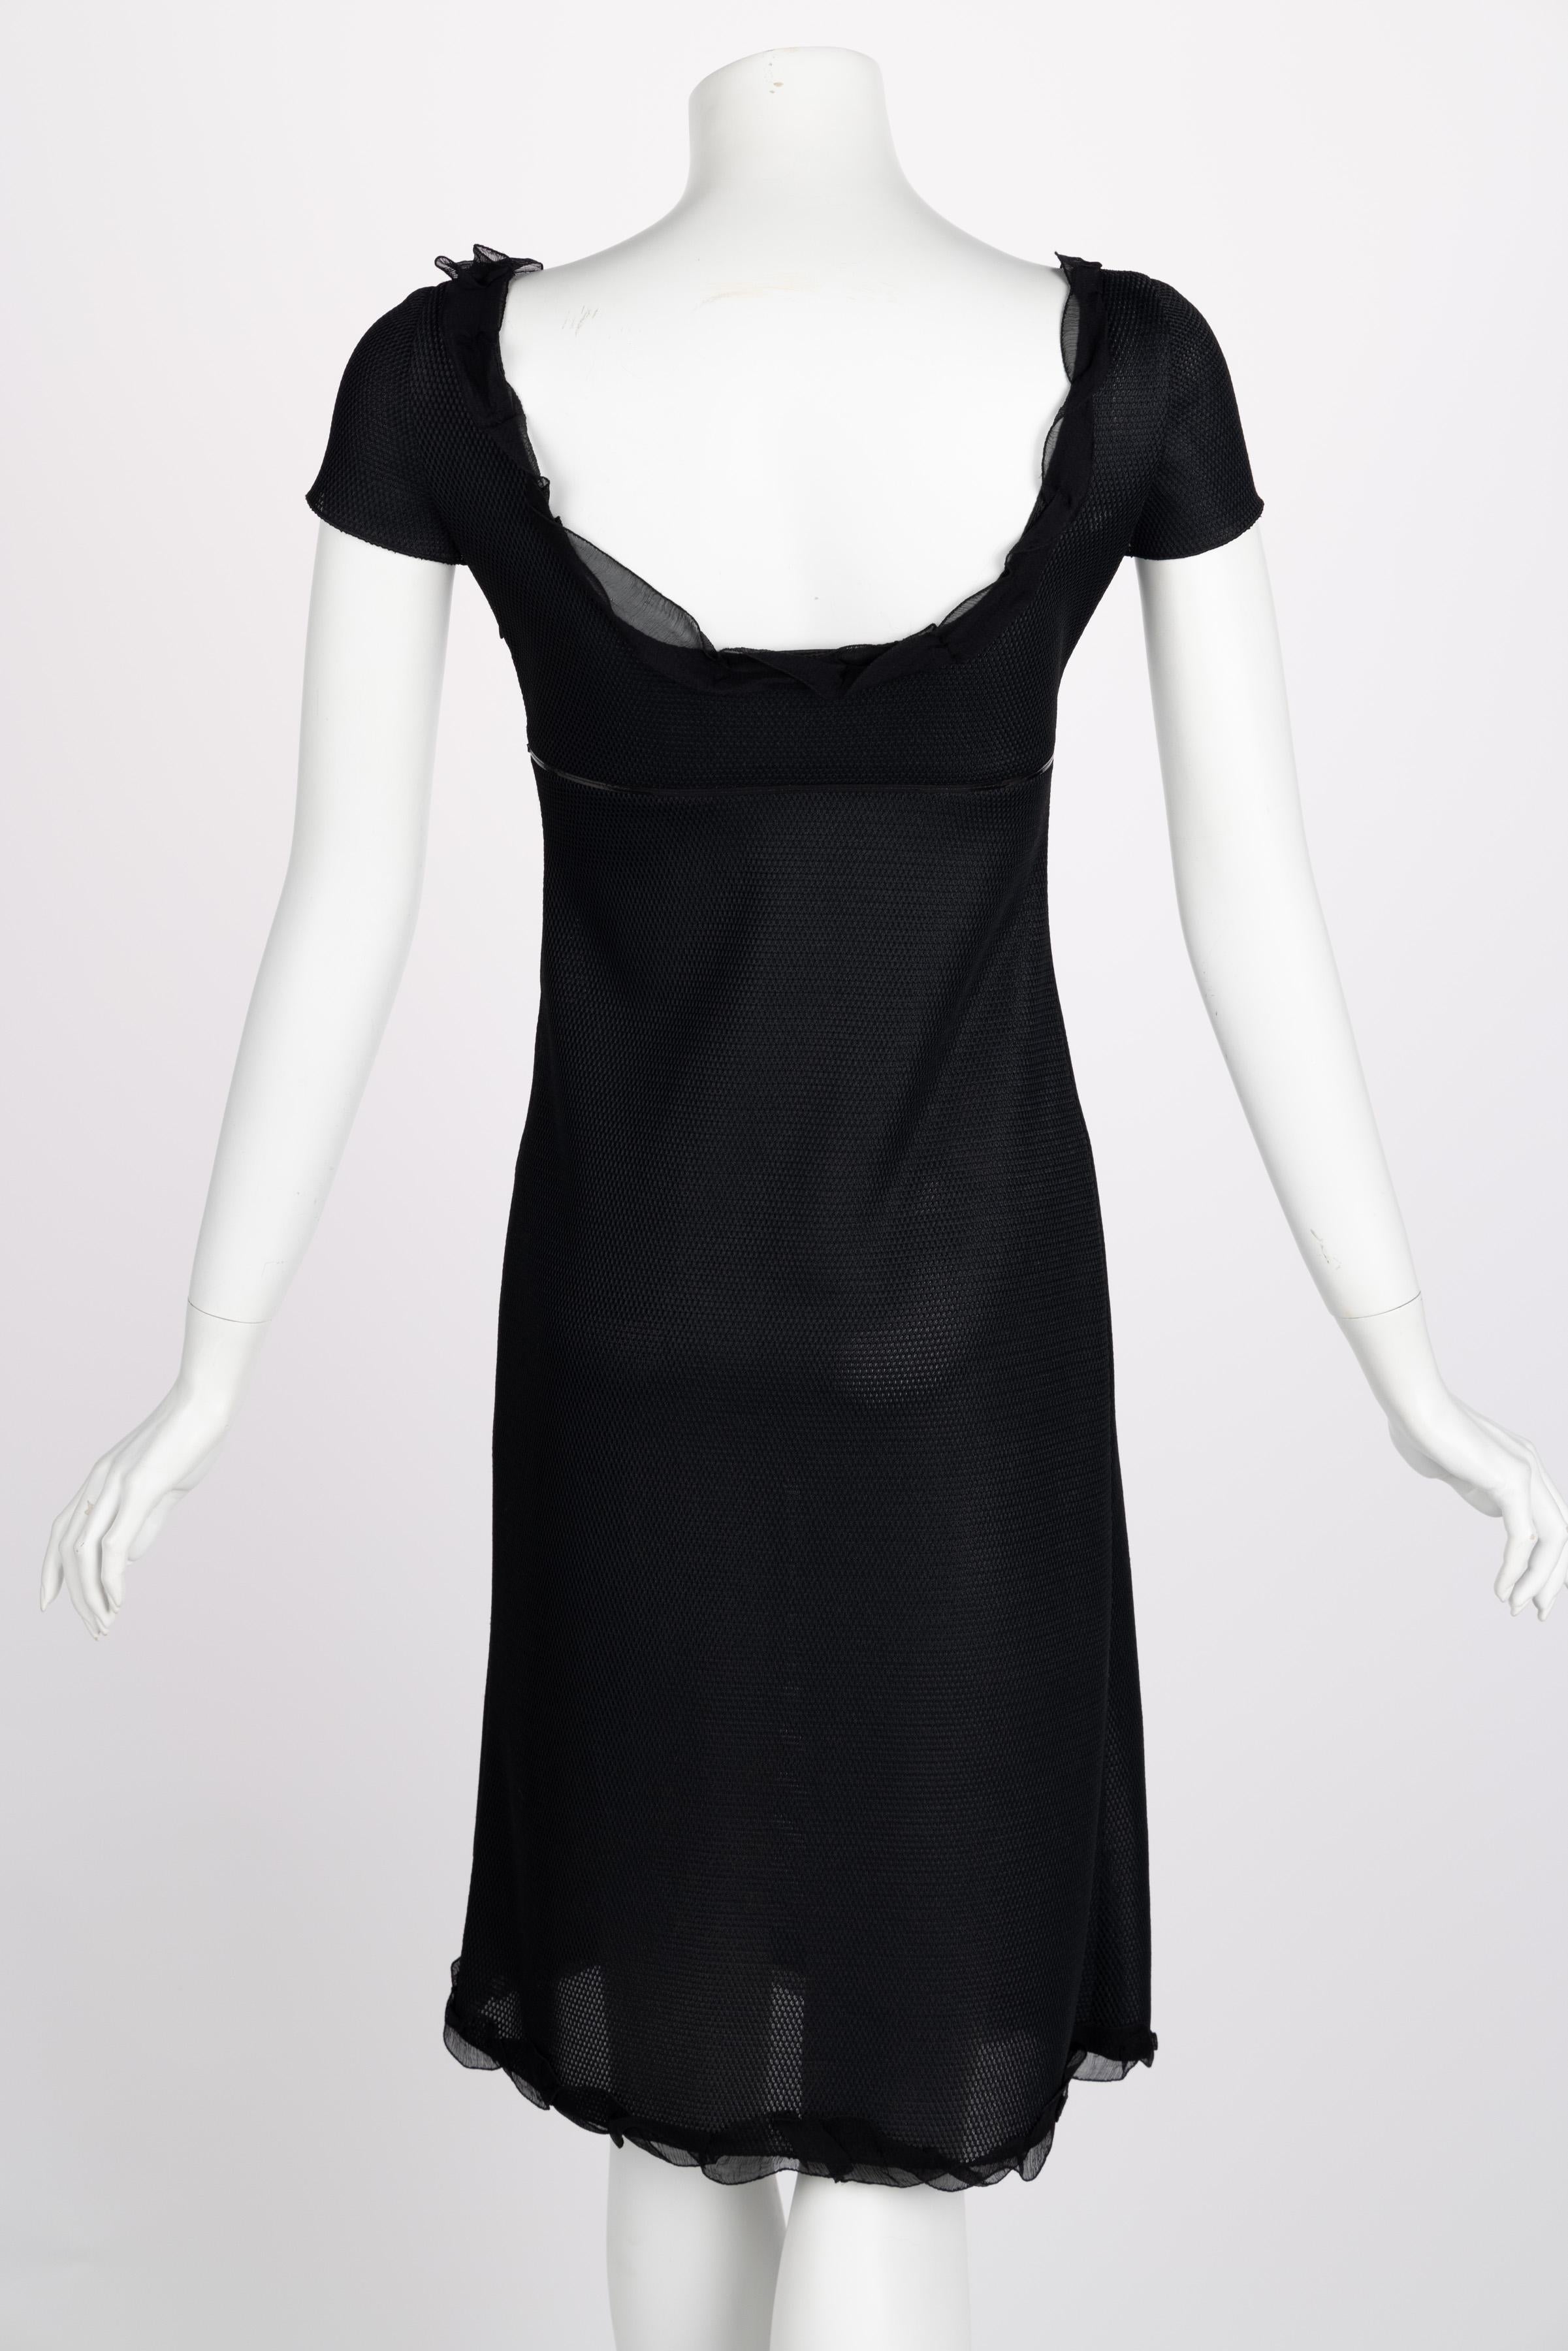 Prada Black Cutout Patent Trim Dress, 1990s In Excellent Condition For Sale In Boca Raton, FL